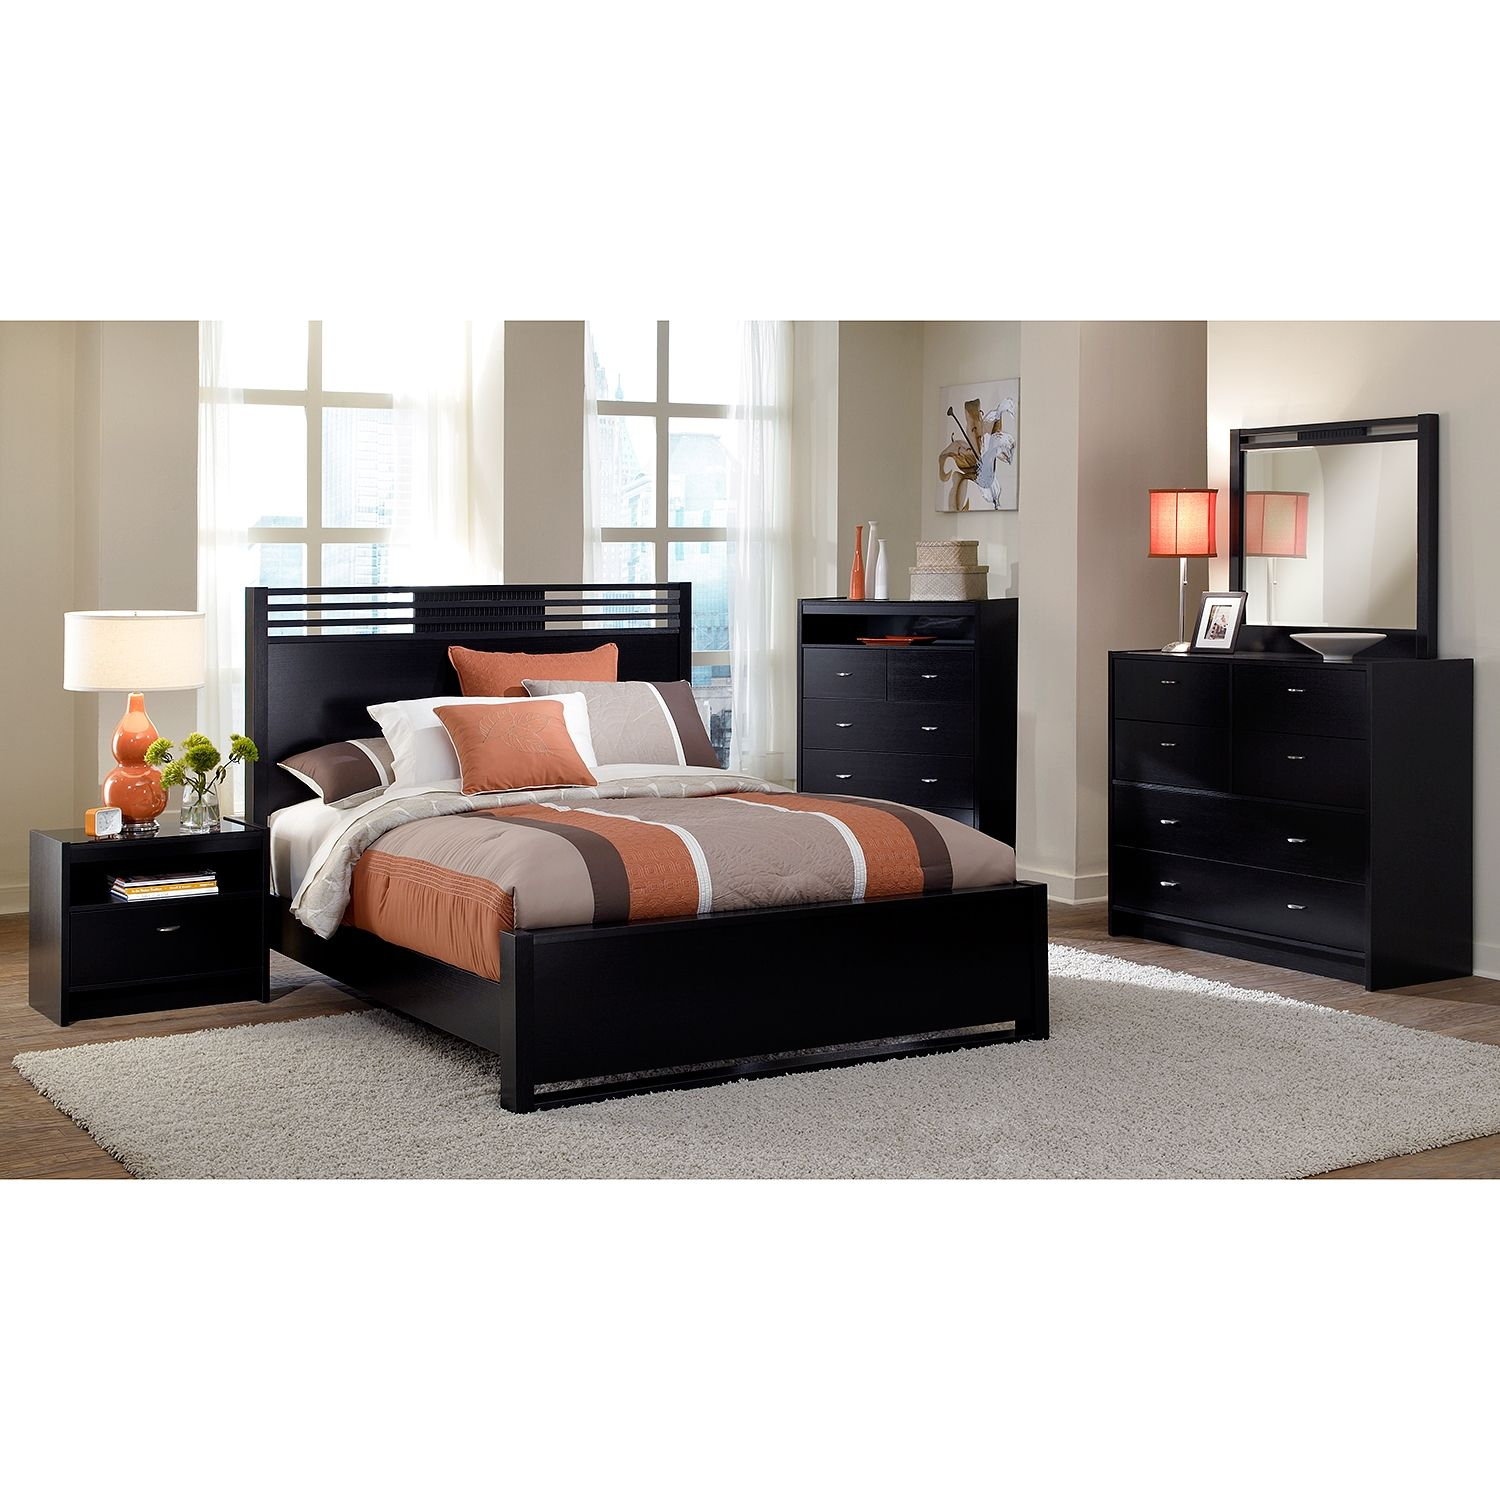 Kendall Espresso Bedroom King Bed Furniture Home Decor regarding measurements 1500 X 1500